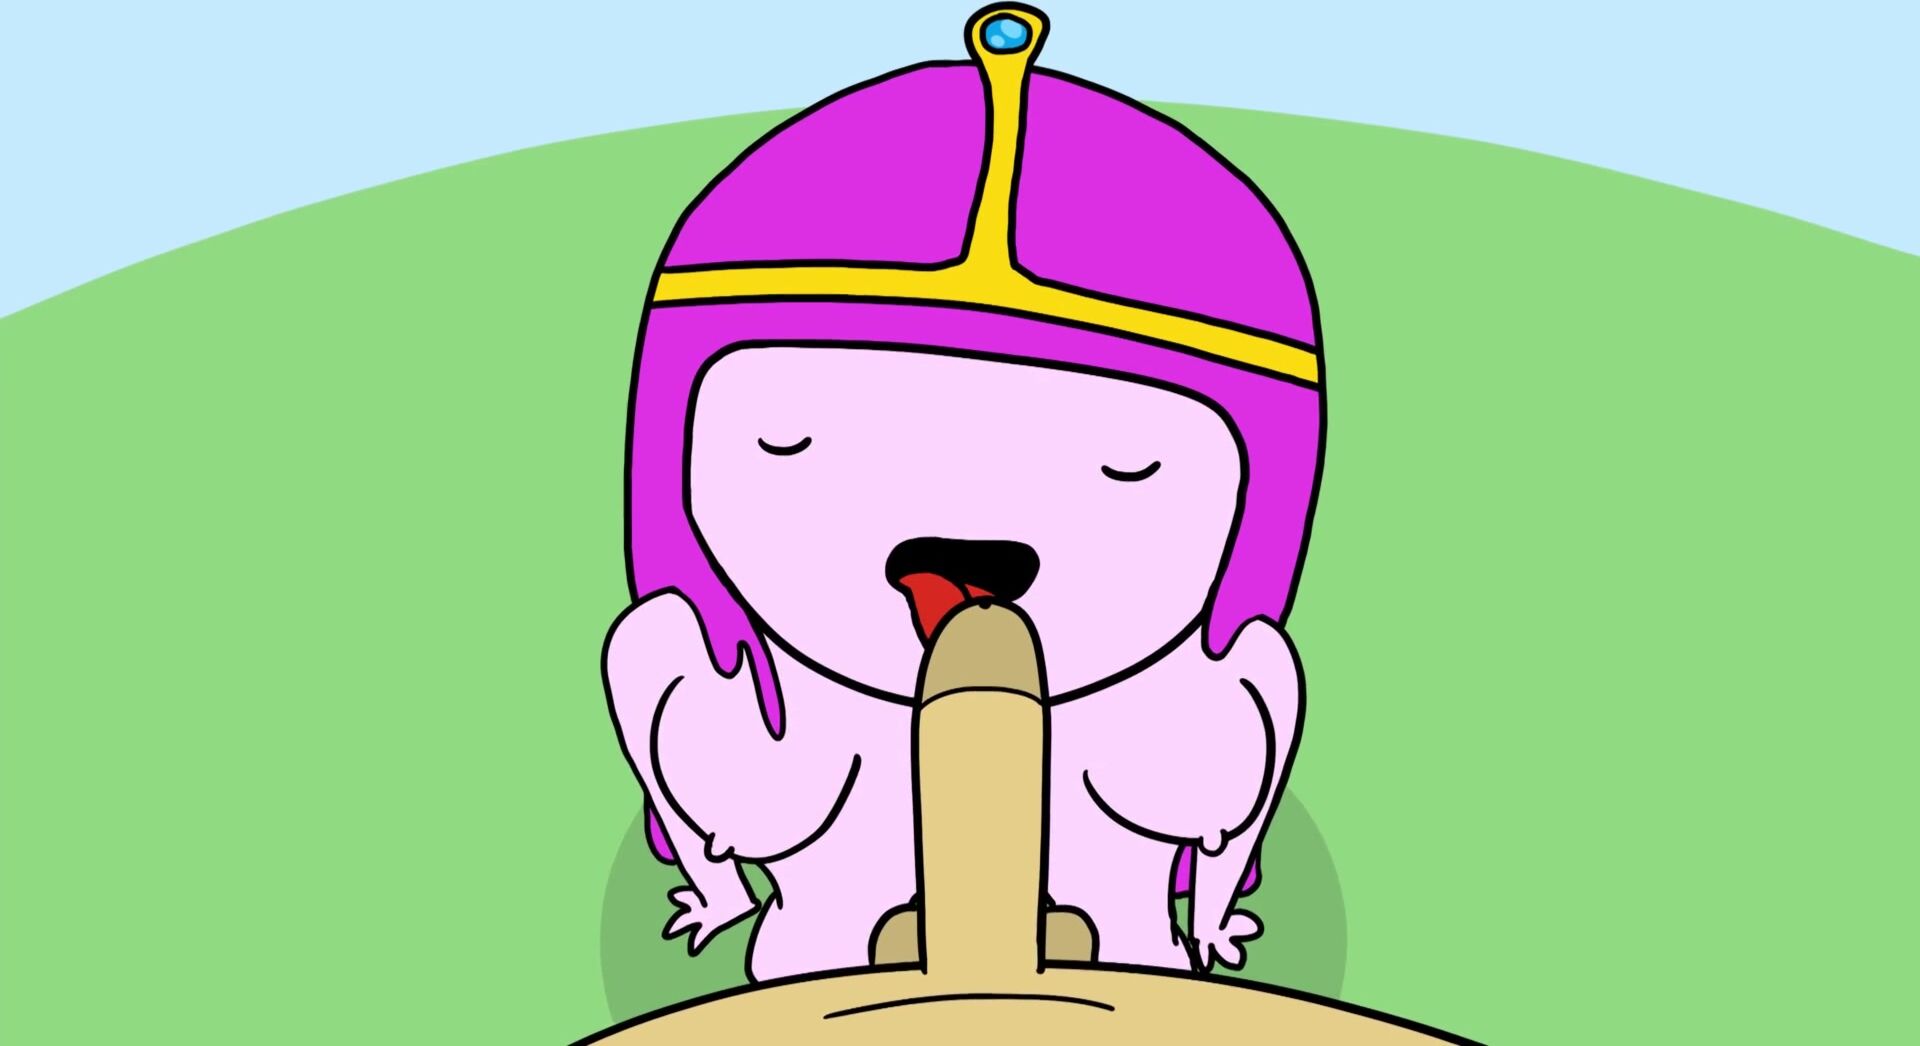 Adventure Time Porn Pov - POV Sex With Princess Bubblegum - Adventure Time Porn Parody - FAPCAT